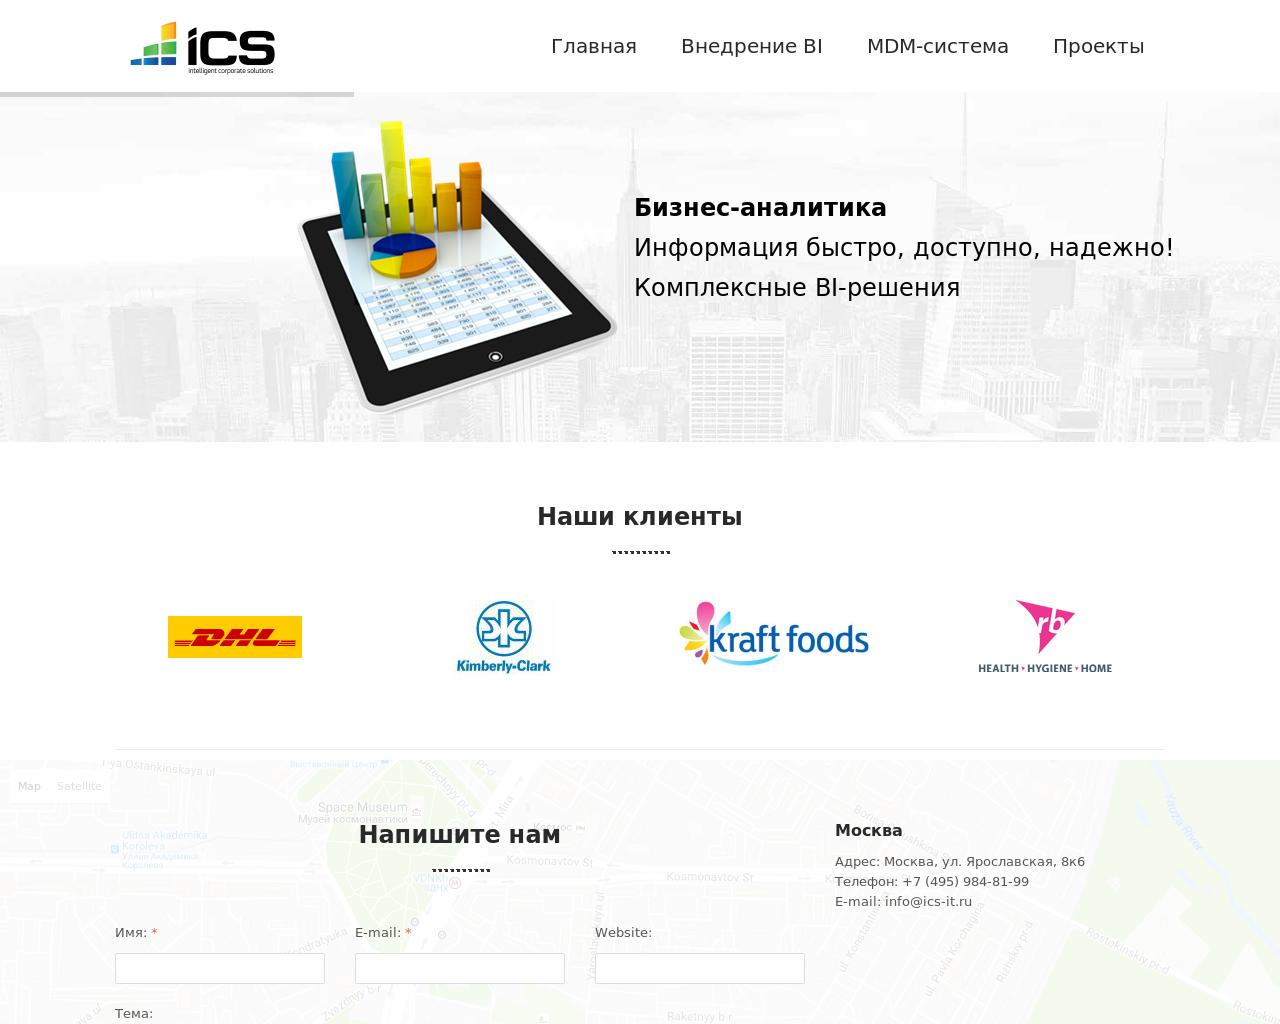 Изображение сайта ics-it.ru в разрешении 1280x1024